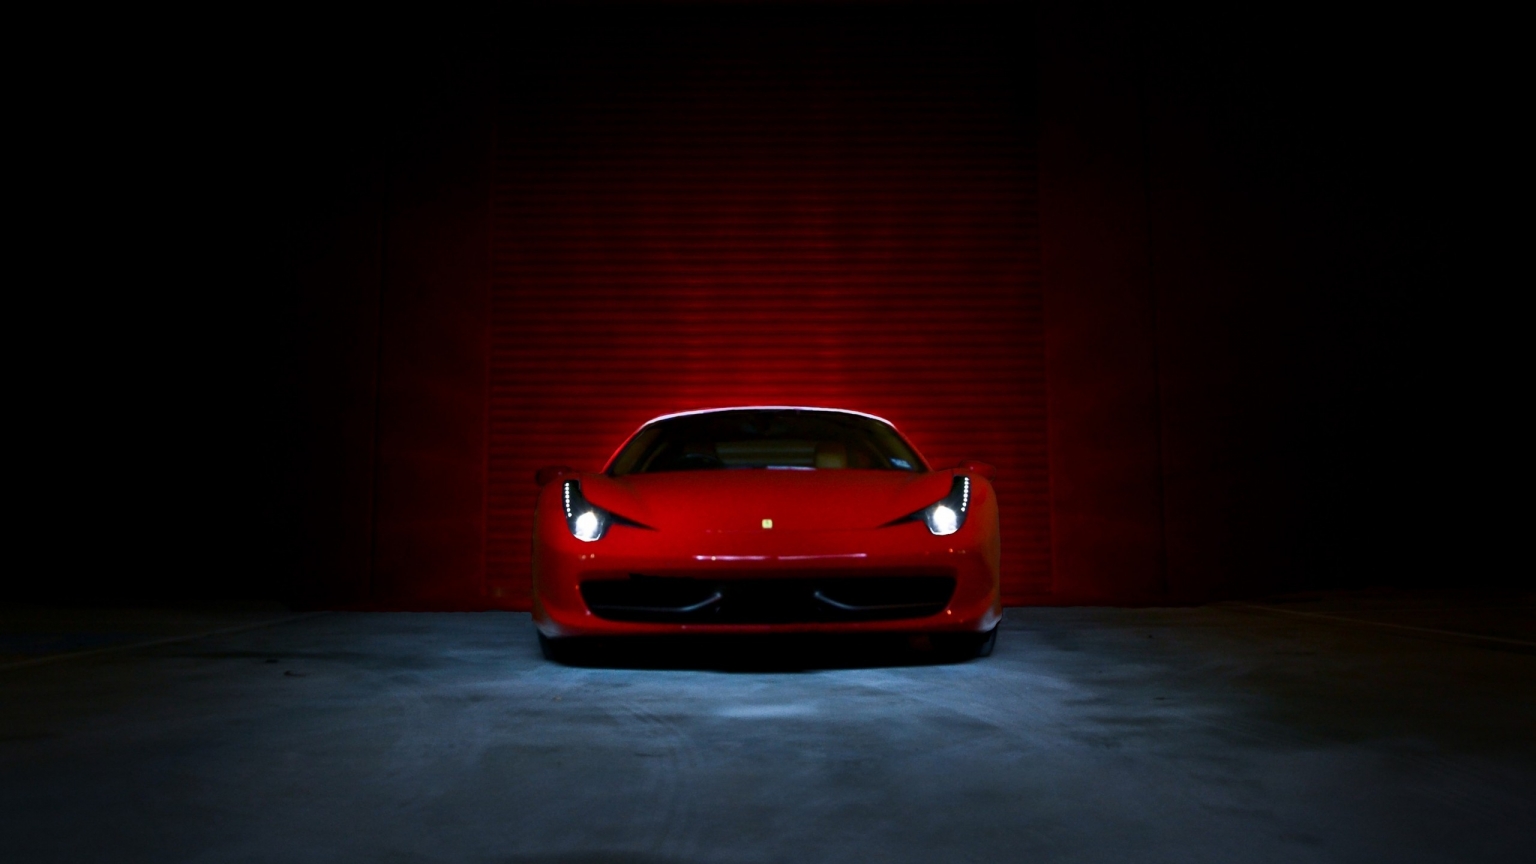 Ferrari 458 Italia Red  for 1536 x 864 HDTV resolution